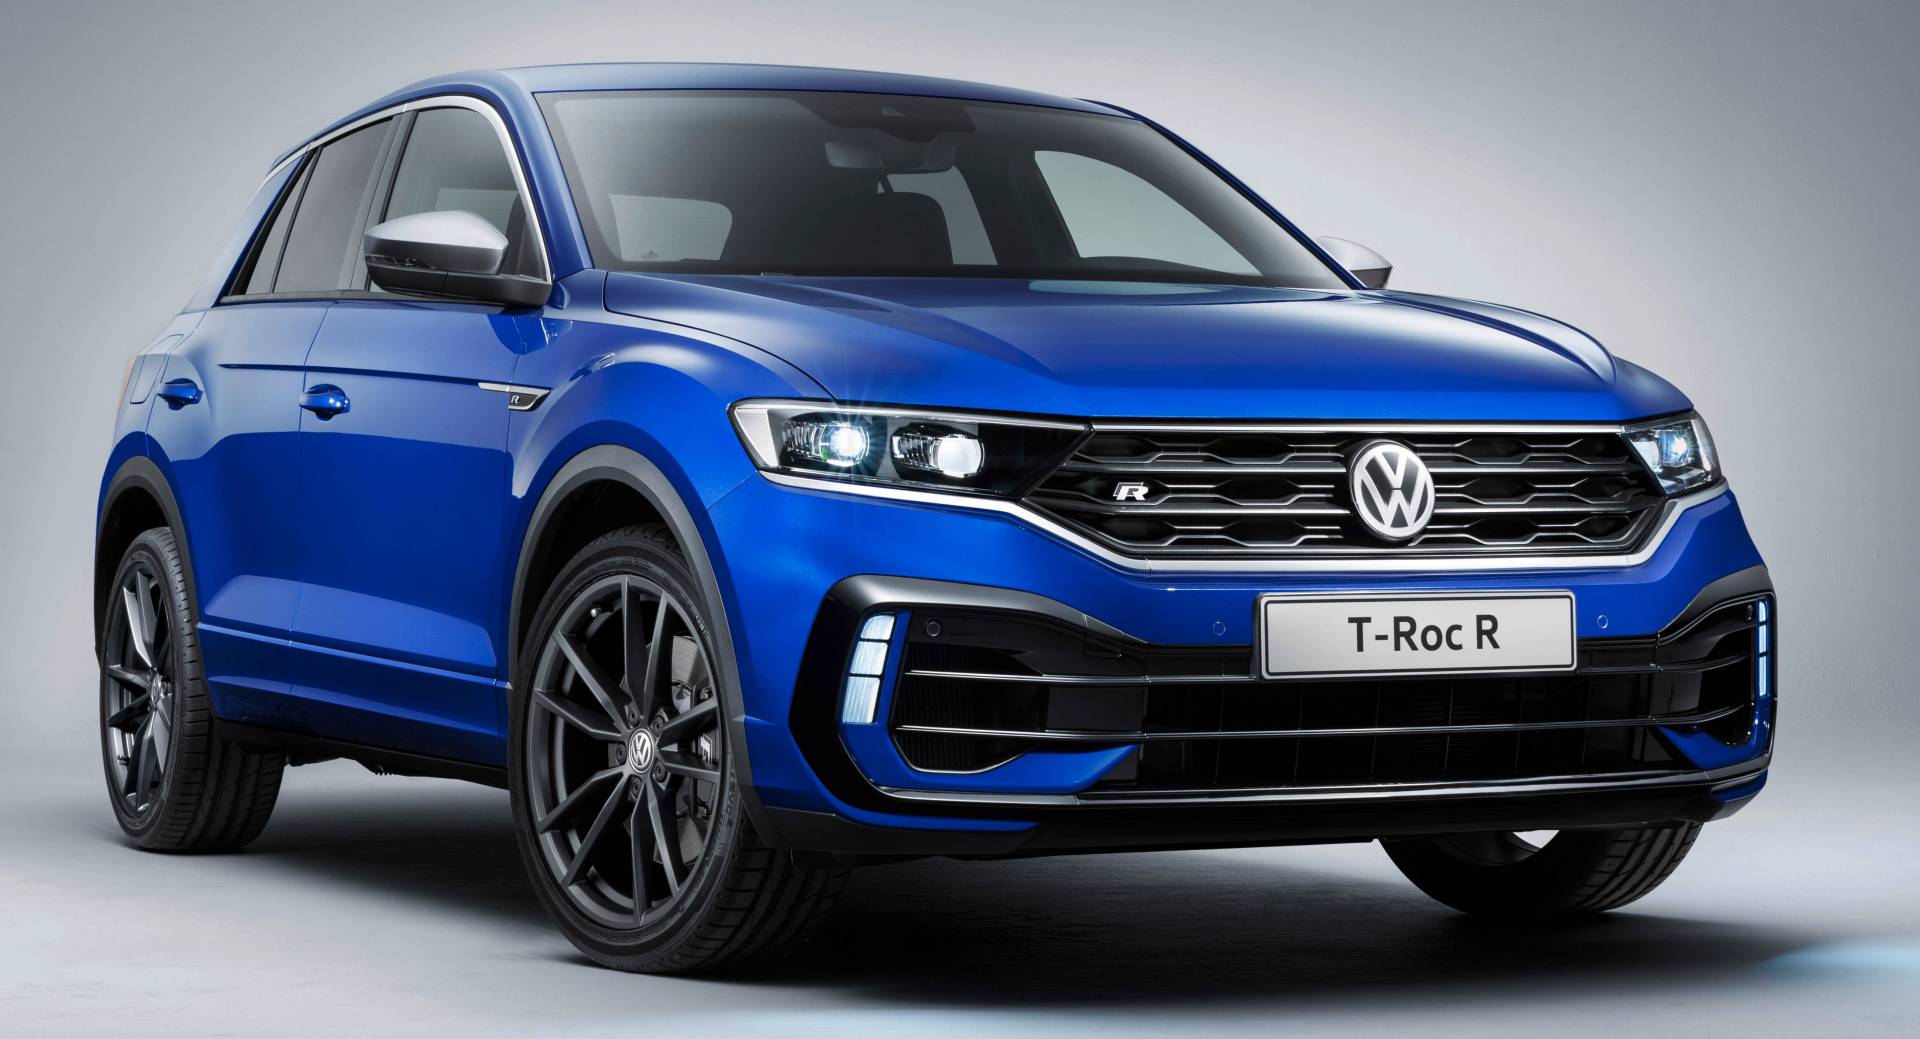 2020 Volkswagen T-Roc cabriolet will debut at Frankfurt motor show